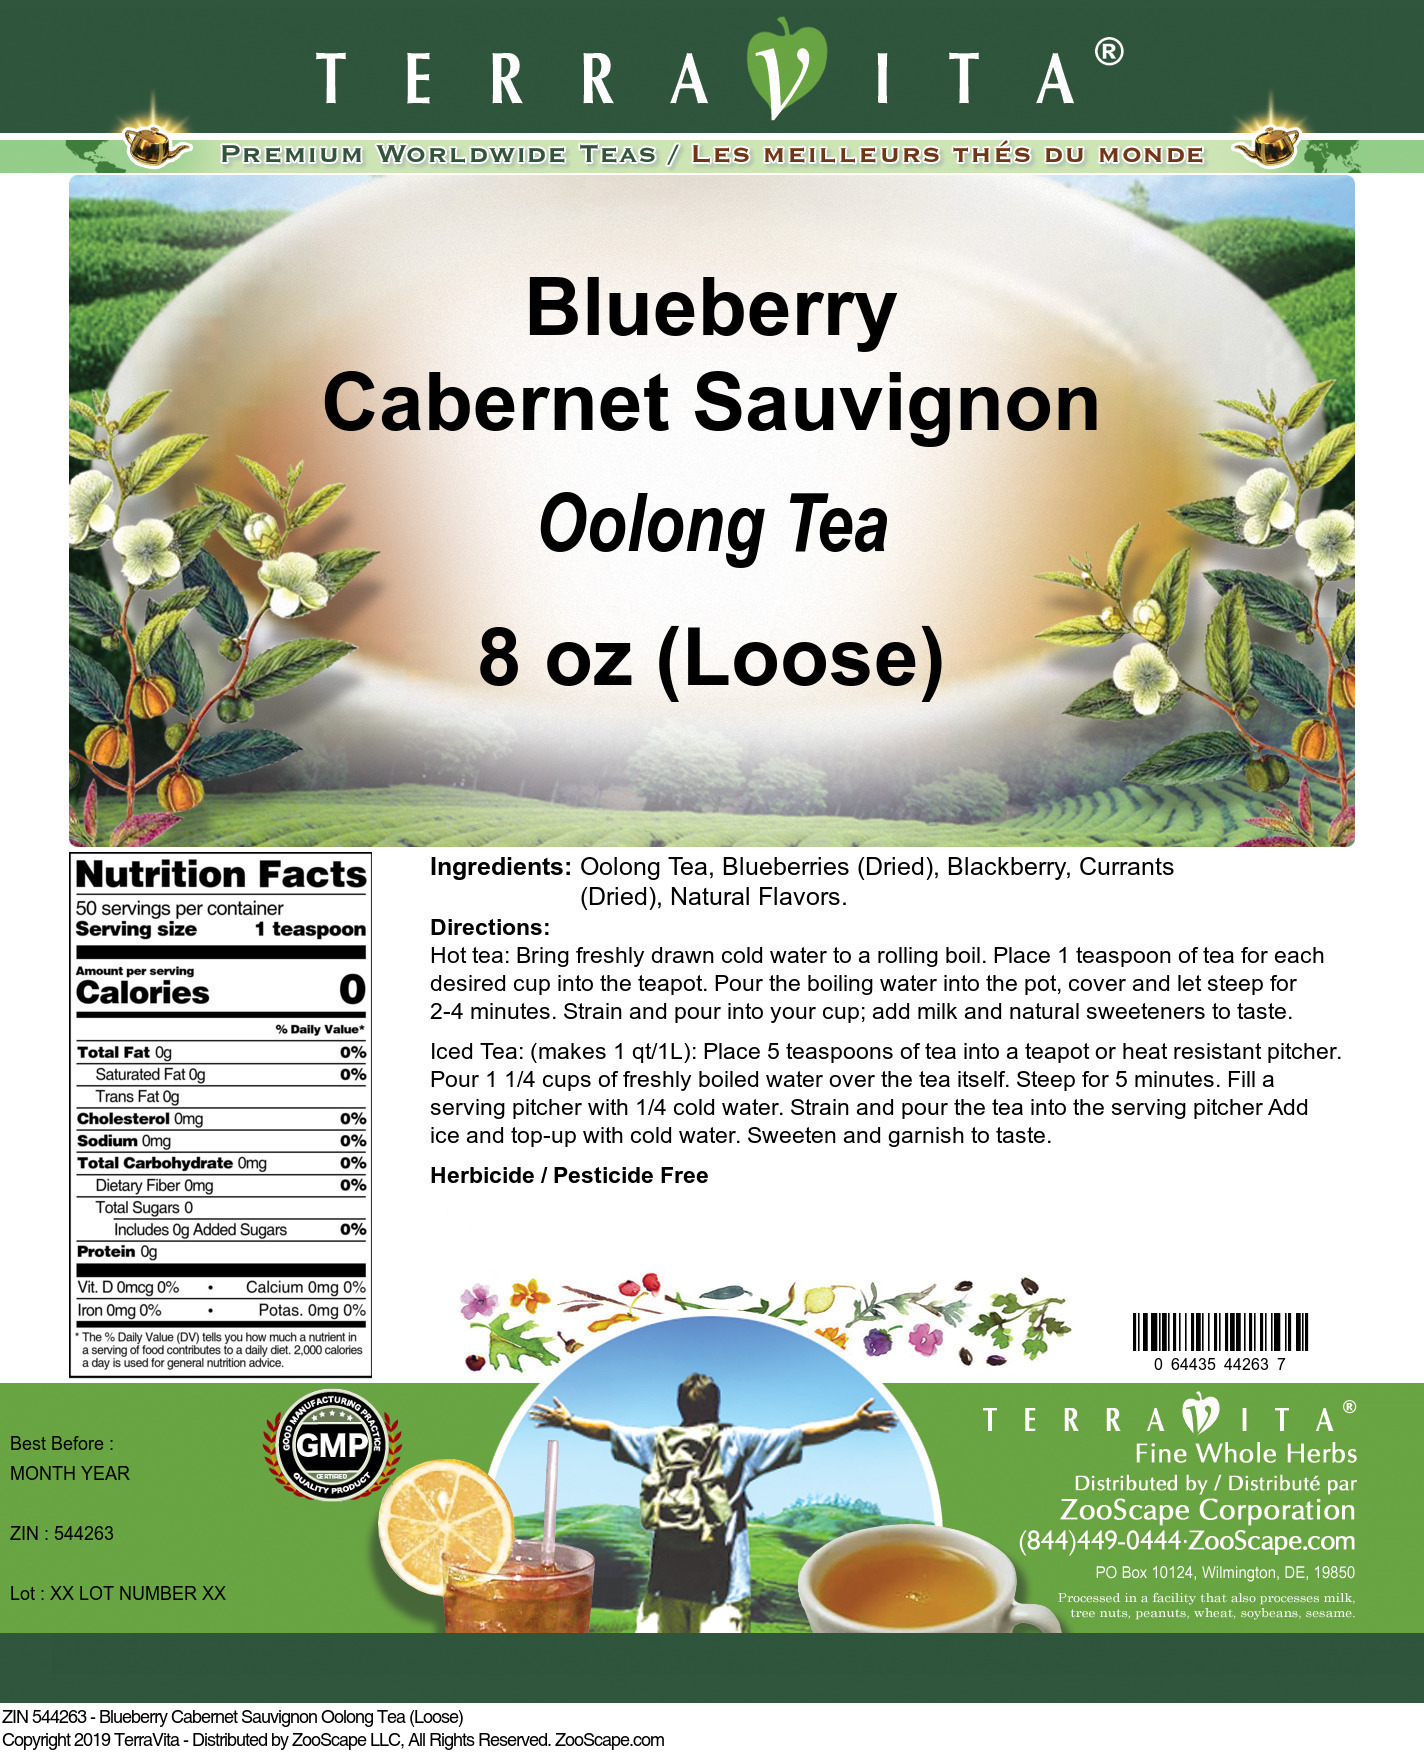 Blueberry Cabernet Sauvignon Oolong Tea (Loose) - Label